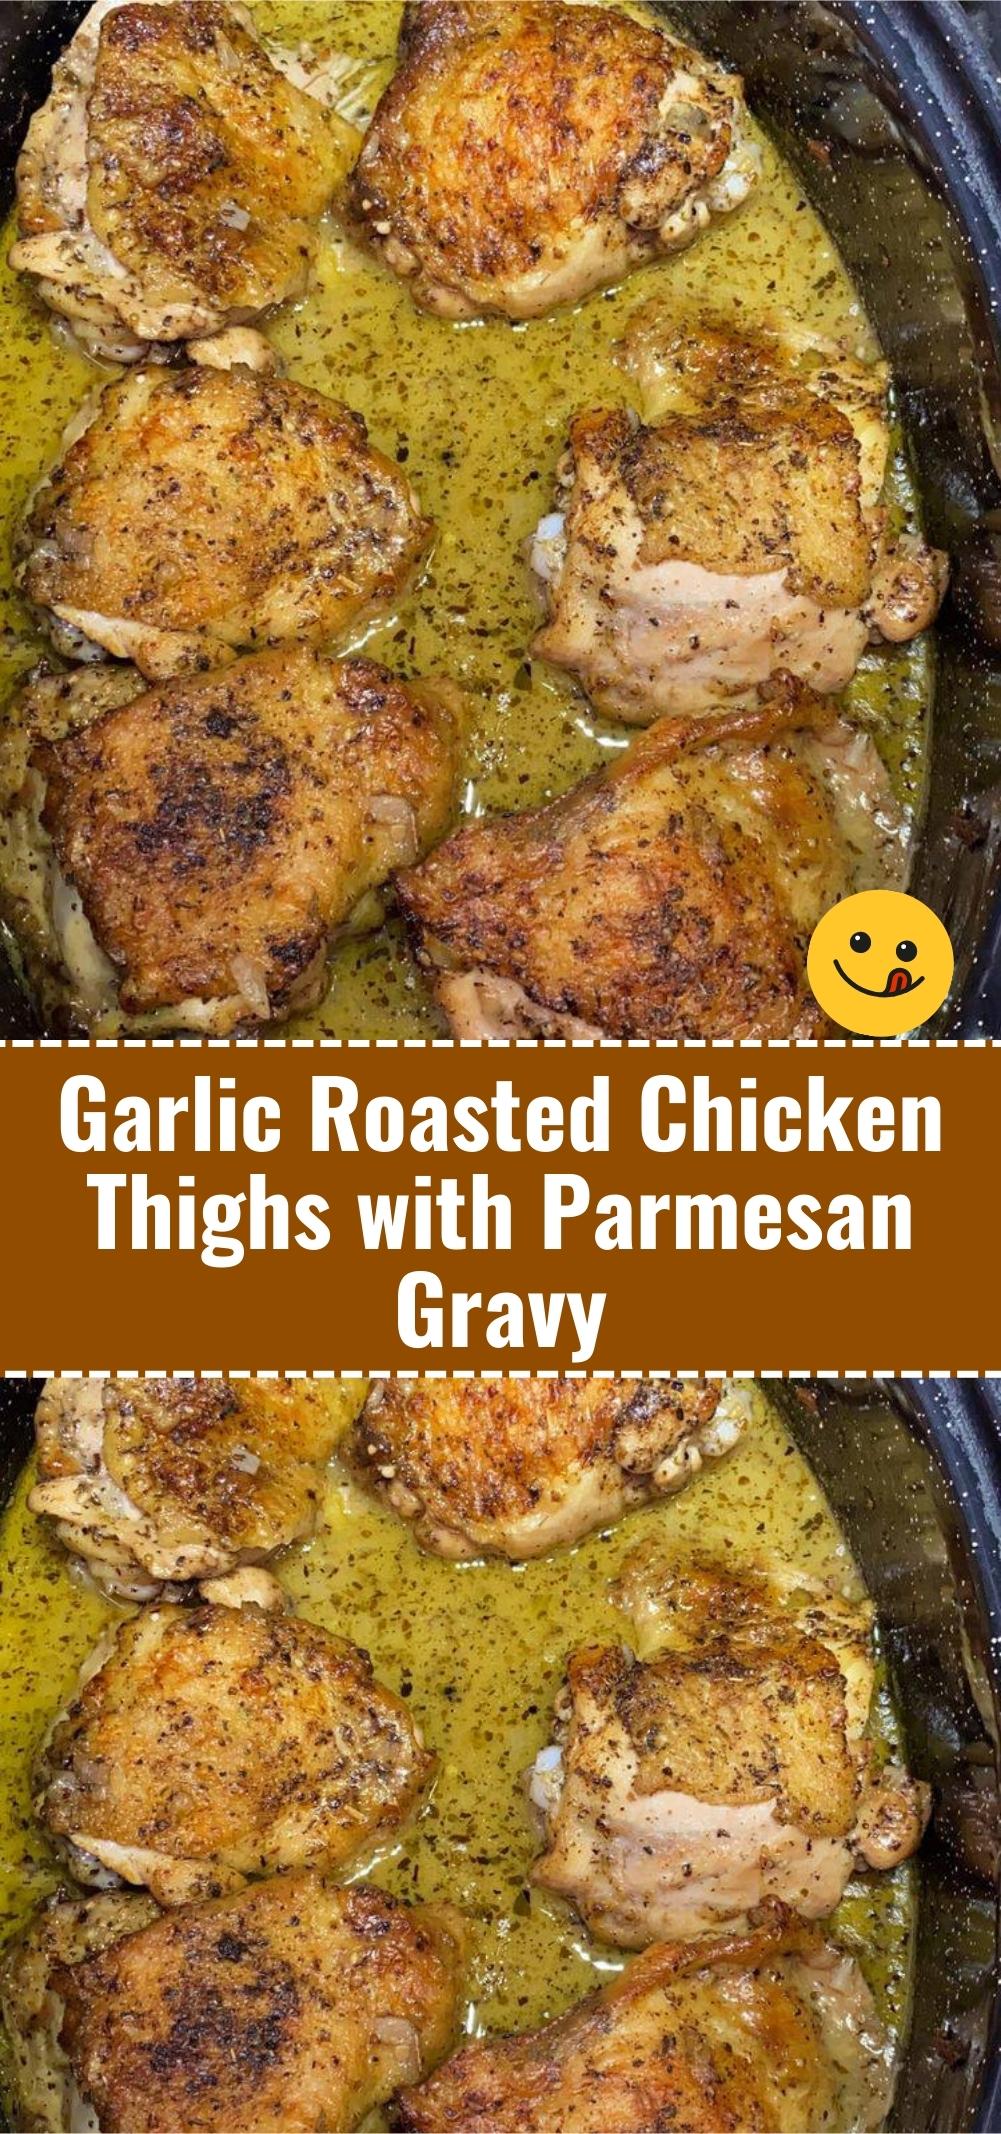 Garlic Roasted Chicken Thighs with Parmesan Gravy